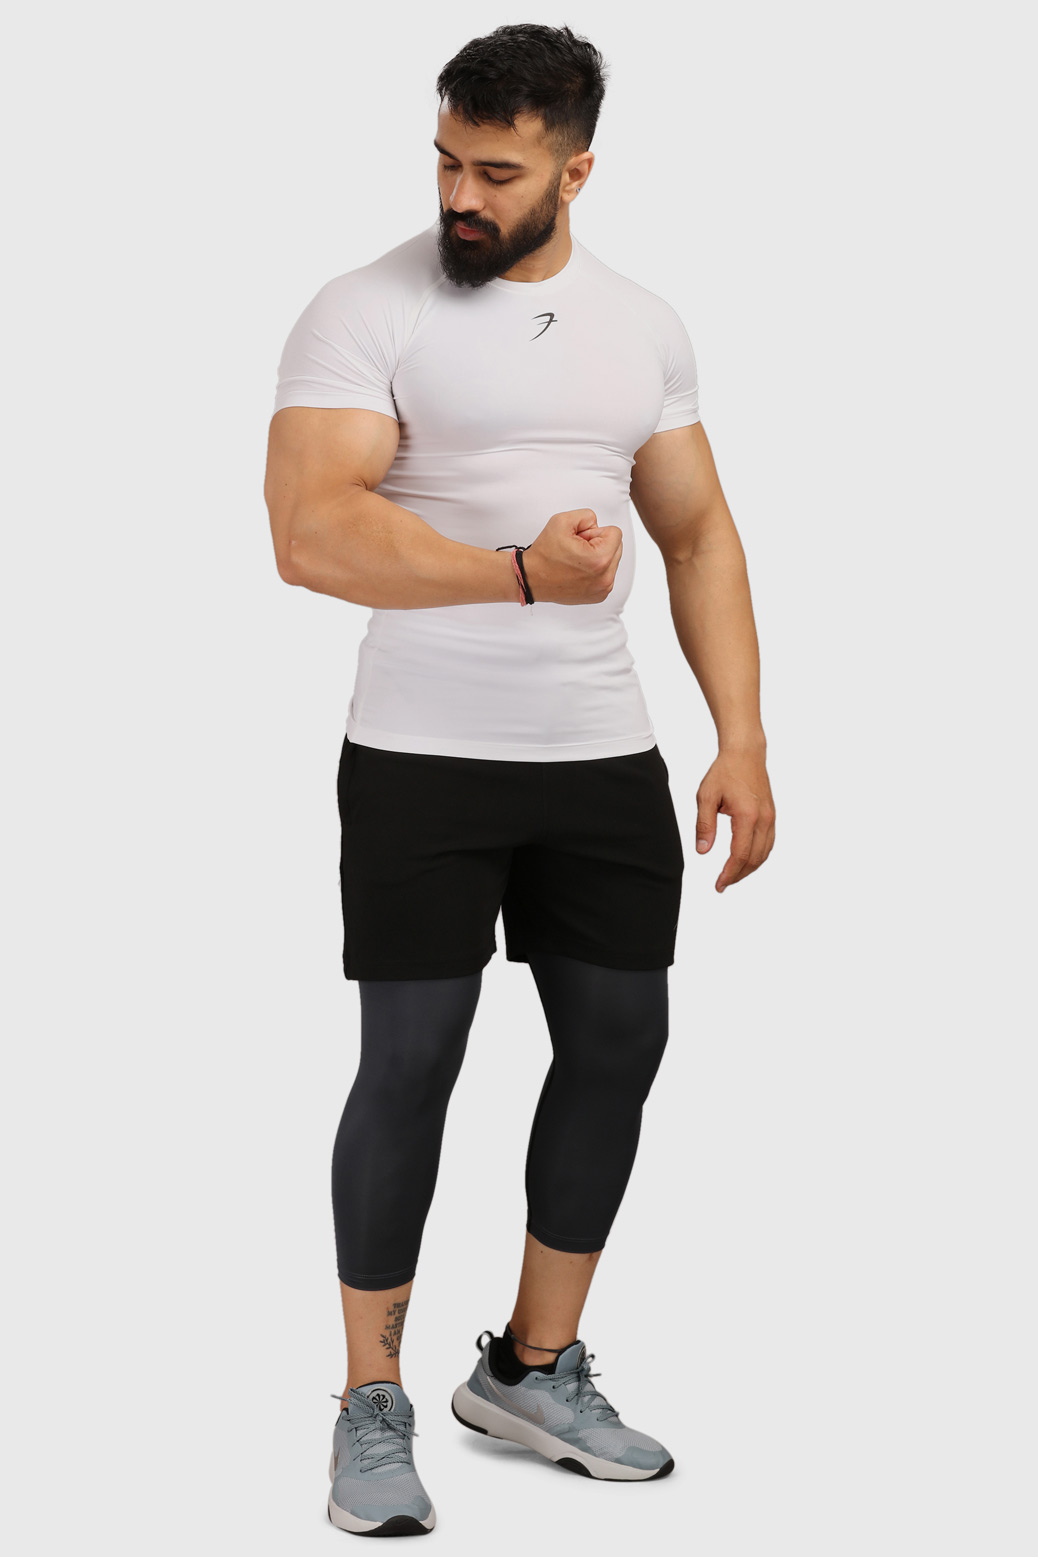 Fuaark Compression White Tshirt For Men | Fuaark Gym tshirts